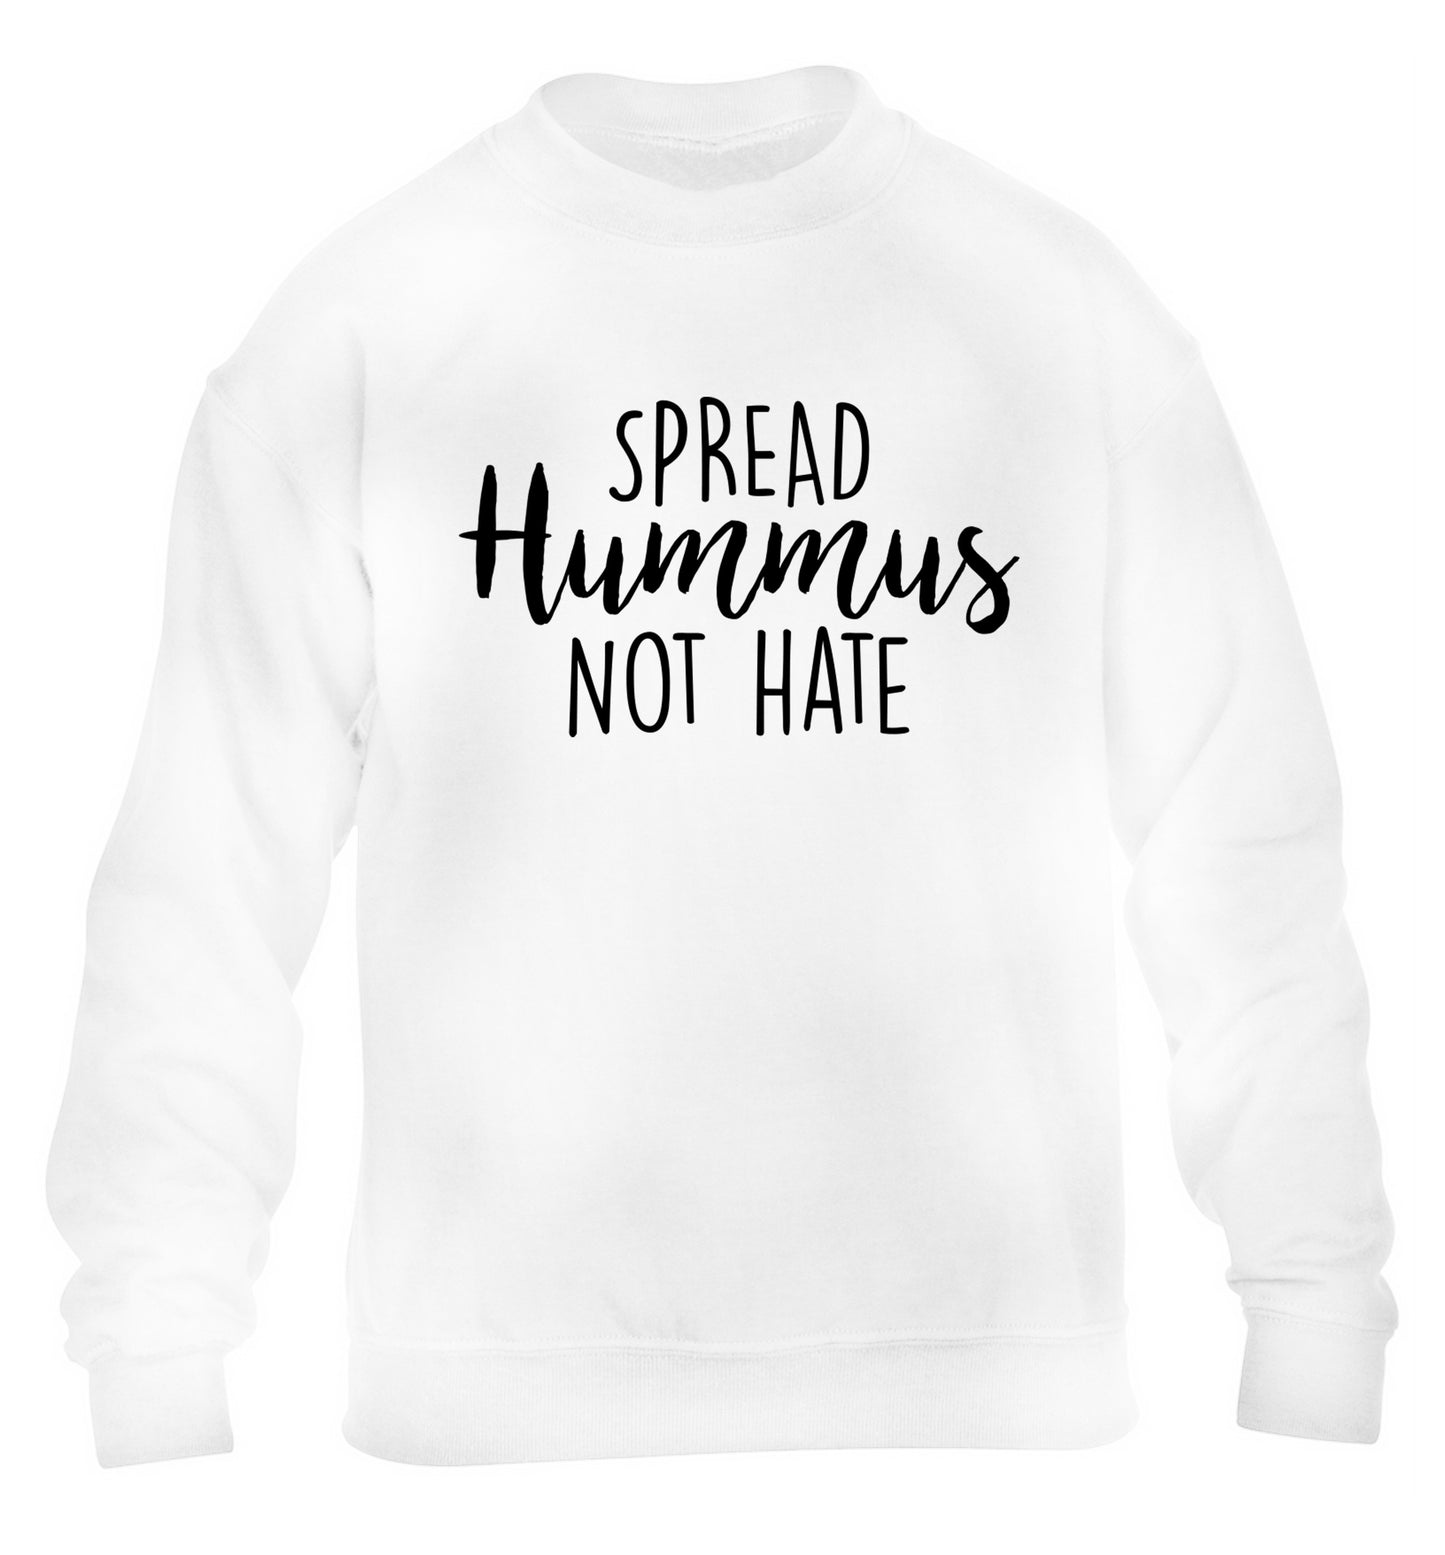 Spread hummus not hate script text children's white sweater 12-14 Years